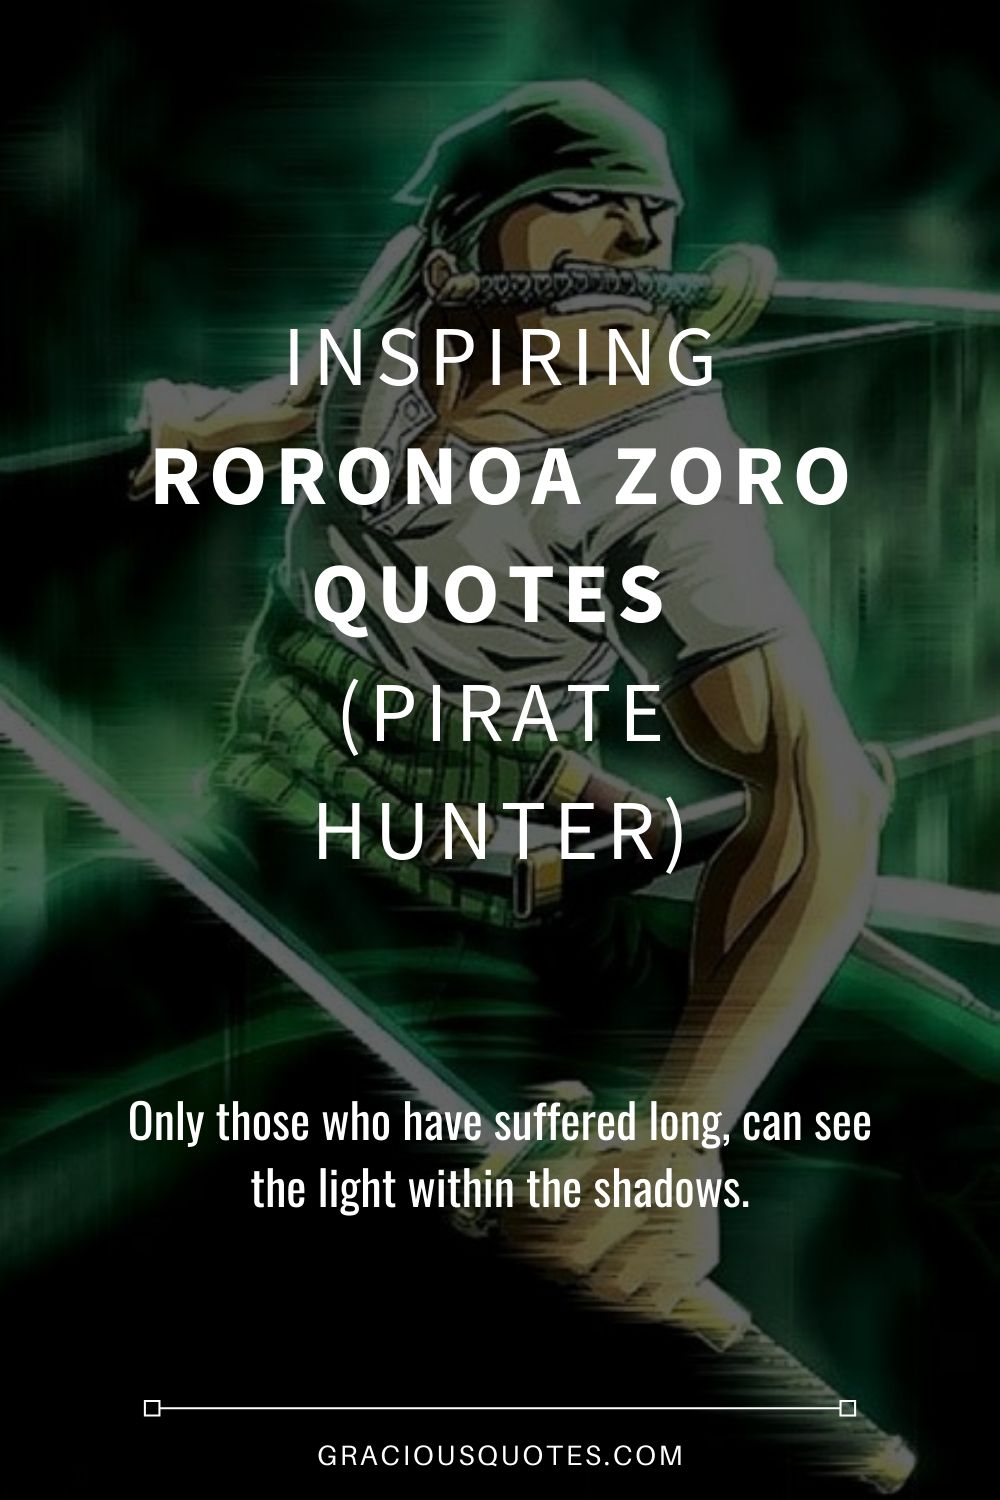 Inspiring Roronoa Zoro Quotes (PIRATE HUNTER) - Gracious Quotes